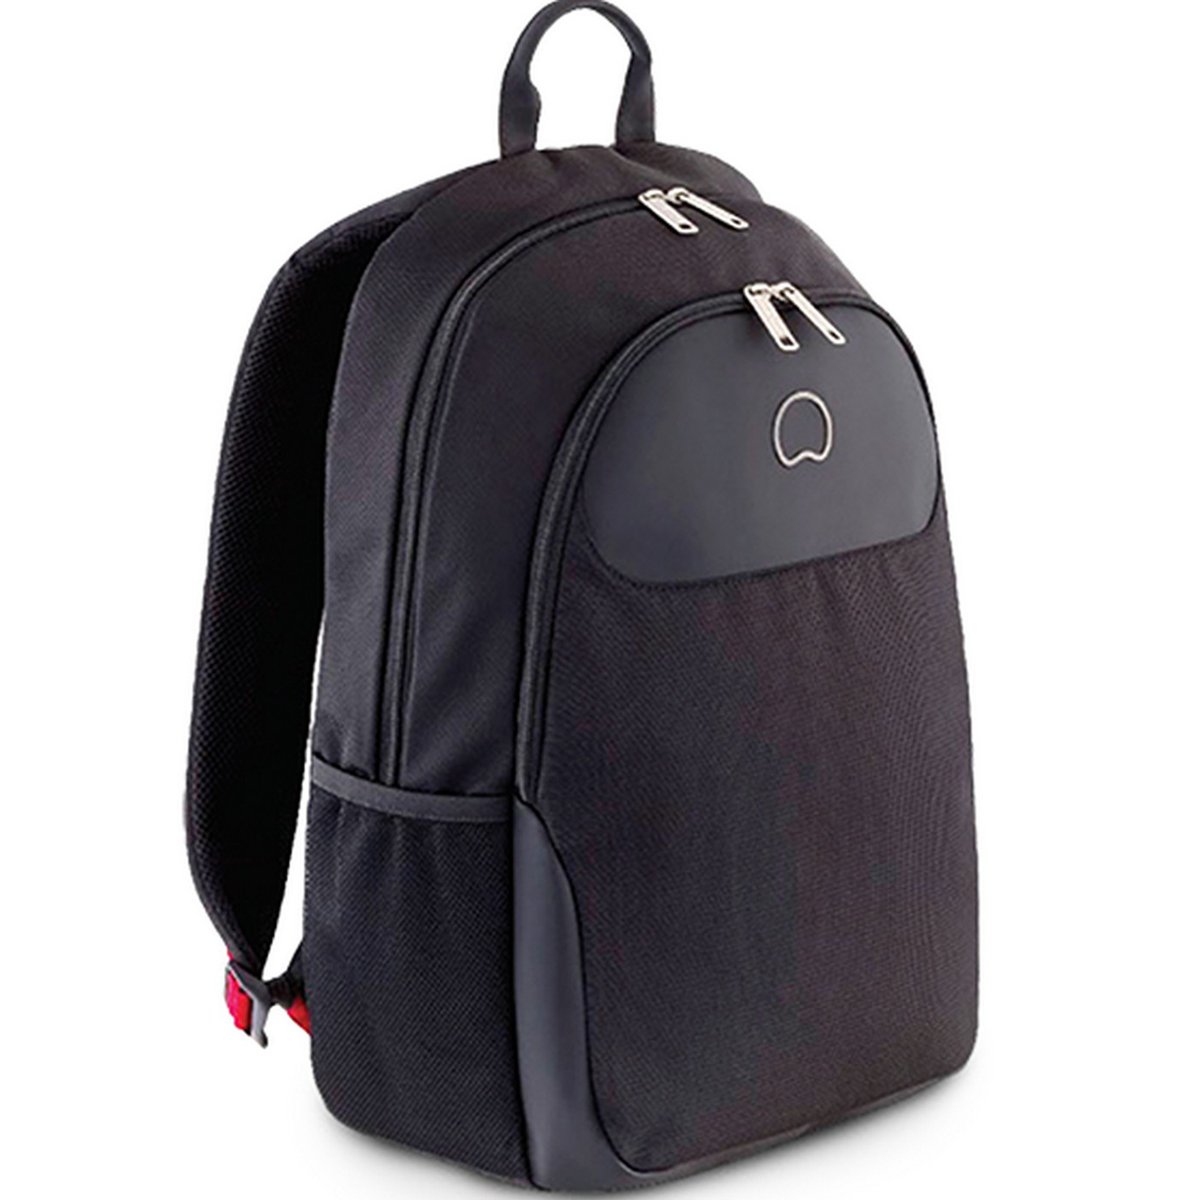 Delsey Parvis Laptop Backpack 3943603 15.6inch